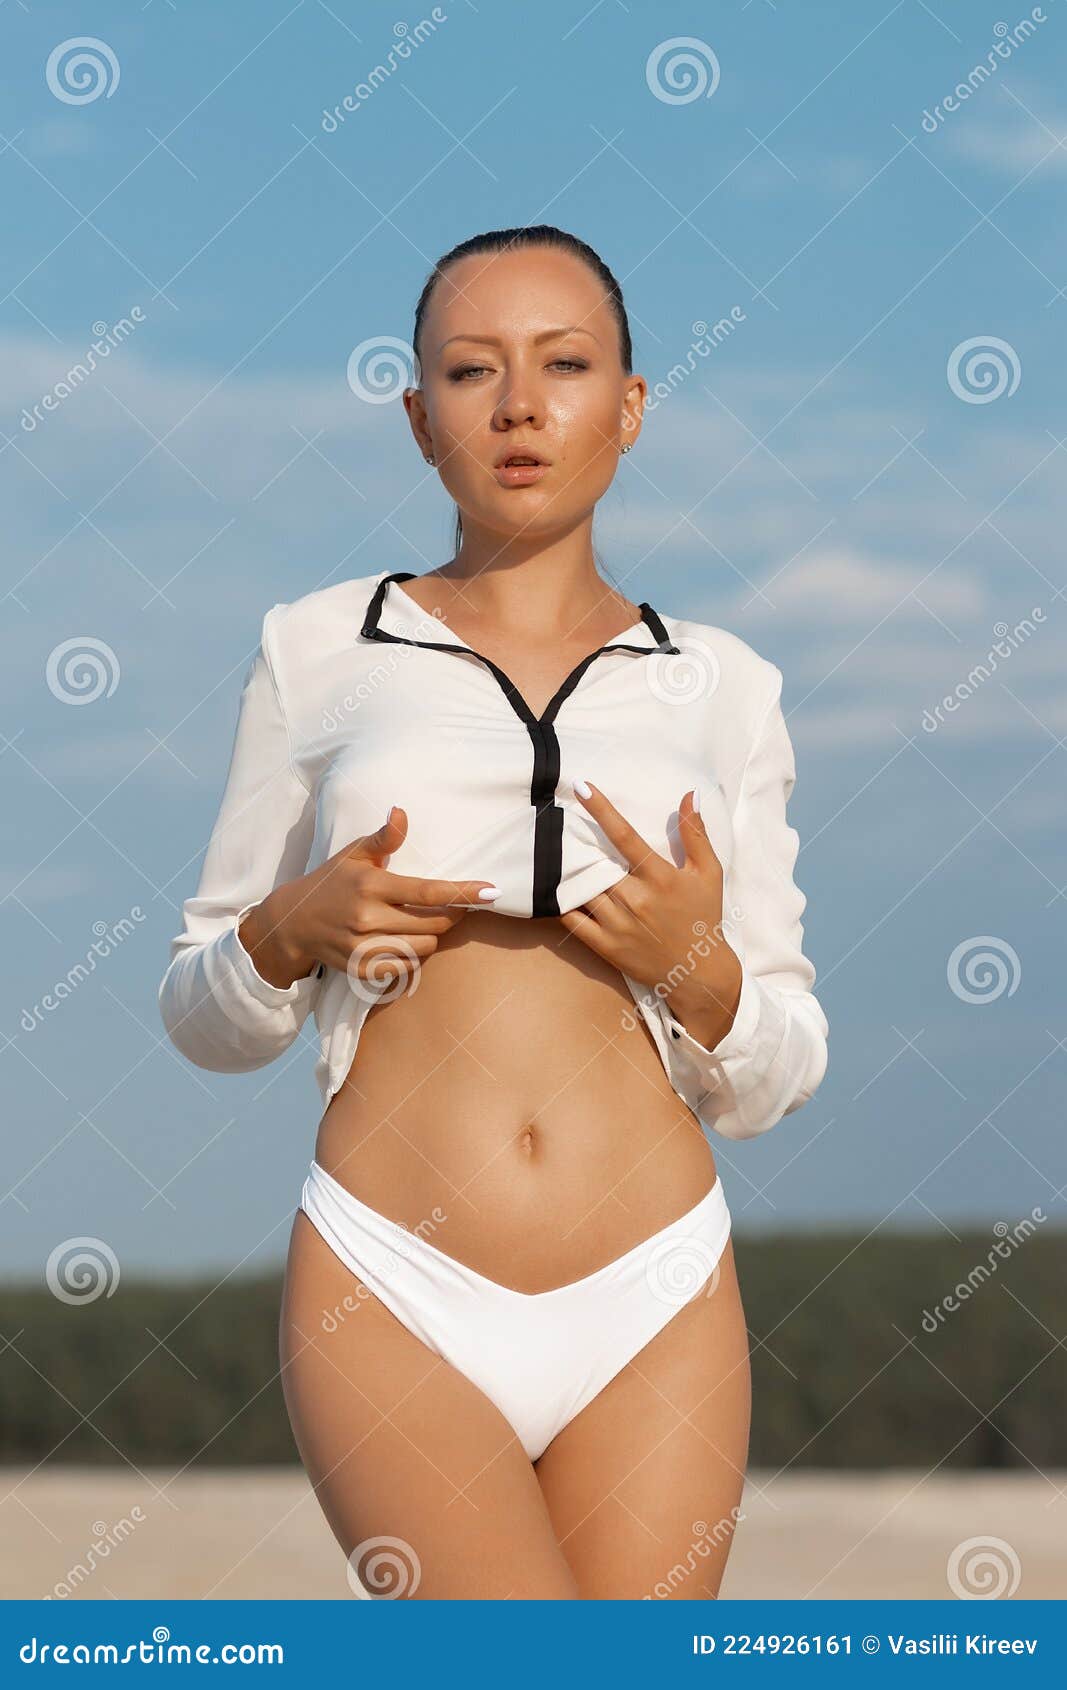 dan myers recommends taking off bikini top pic